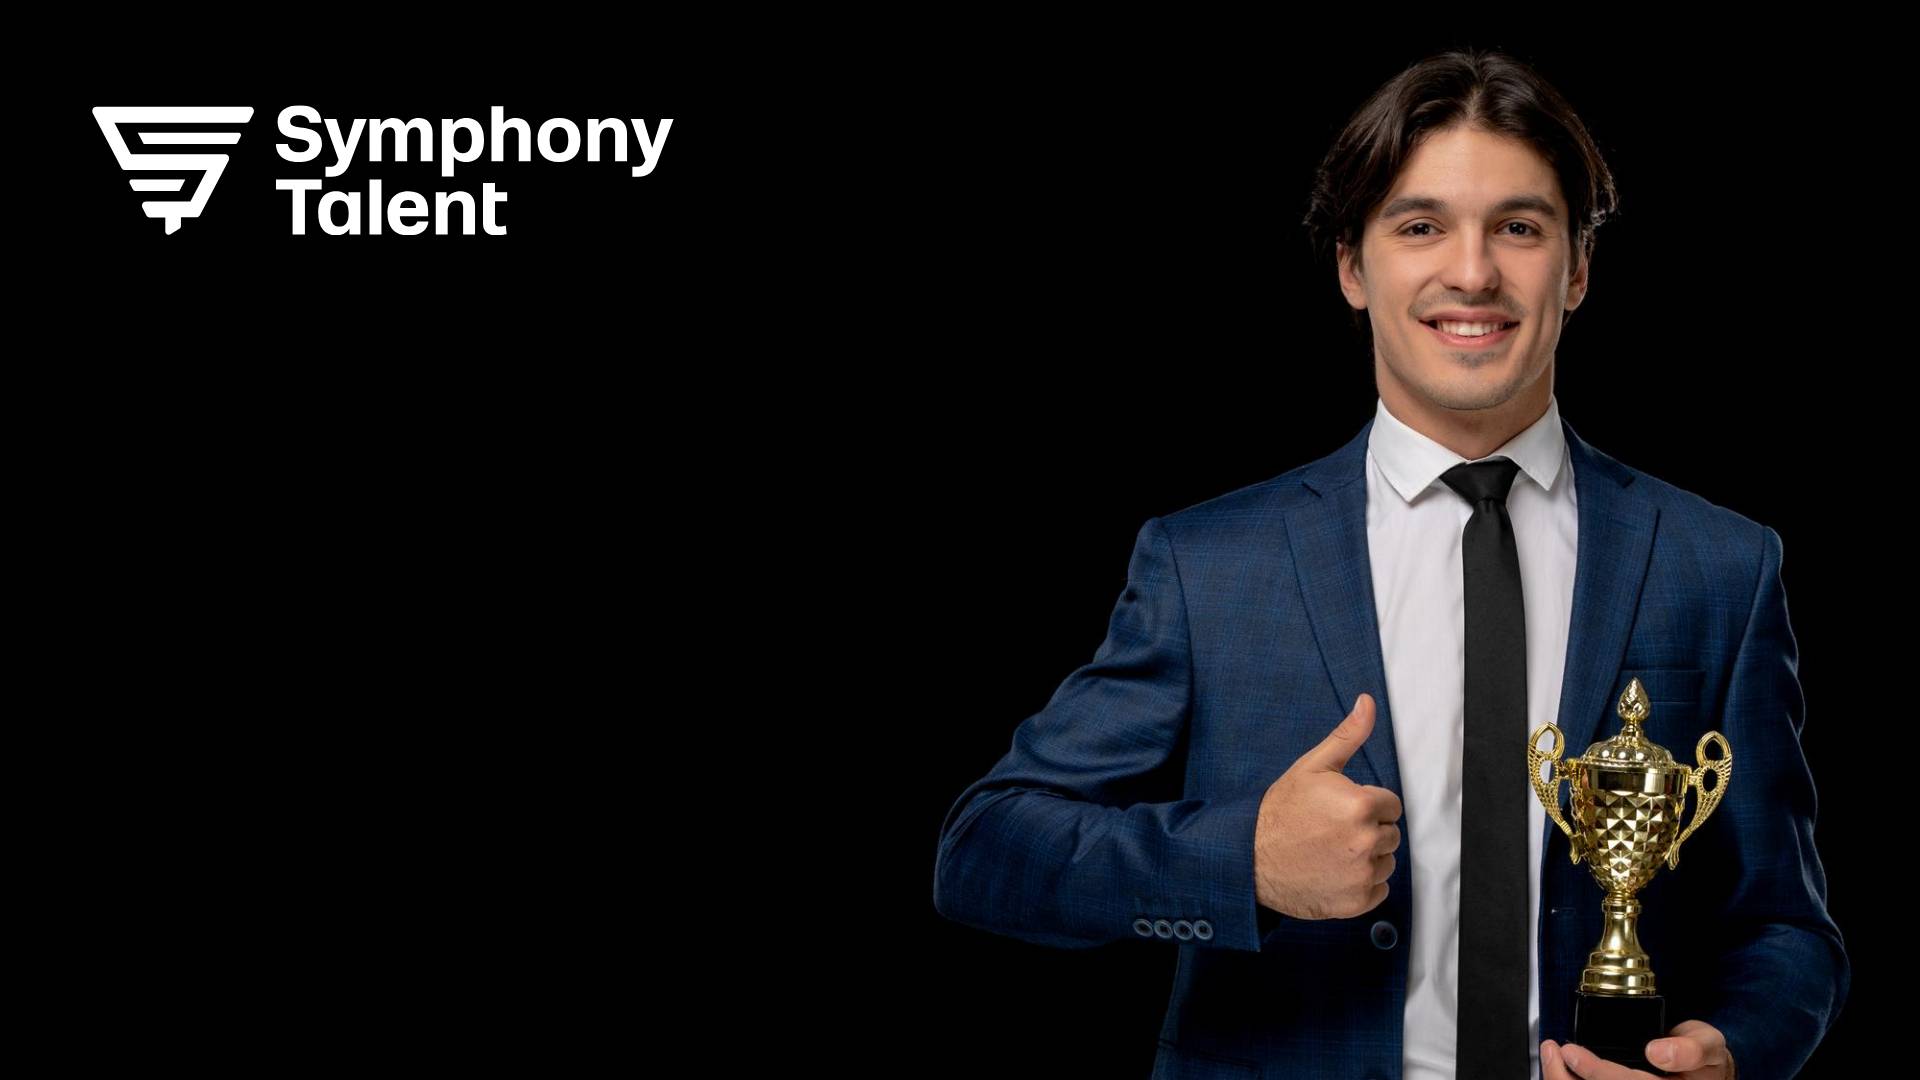 Symphony Talent Wins HR Tech Award for Best Comprehensive Solution